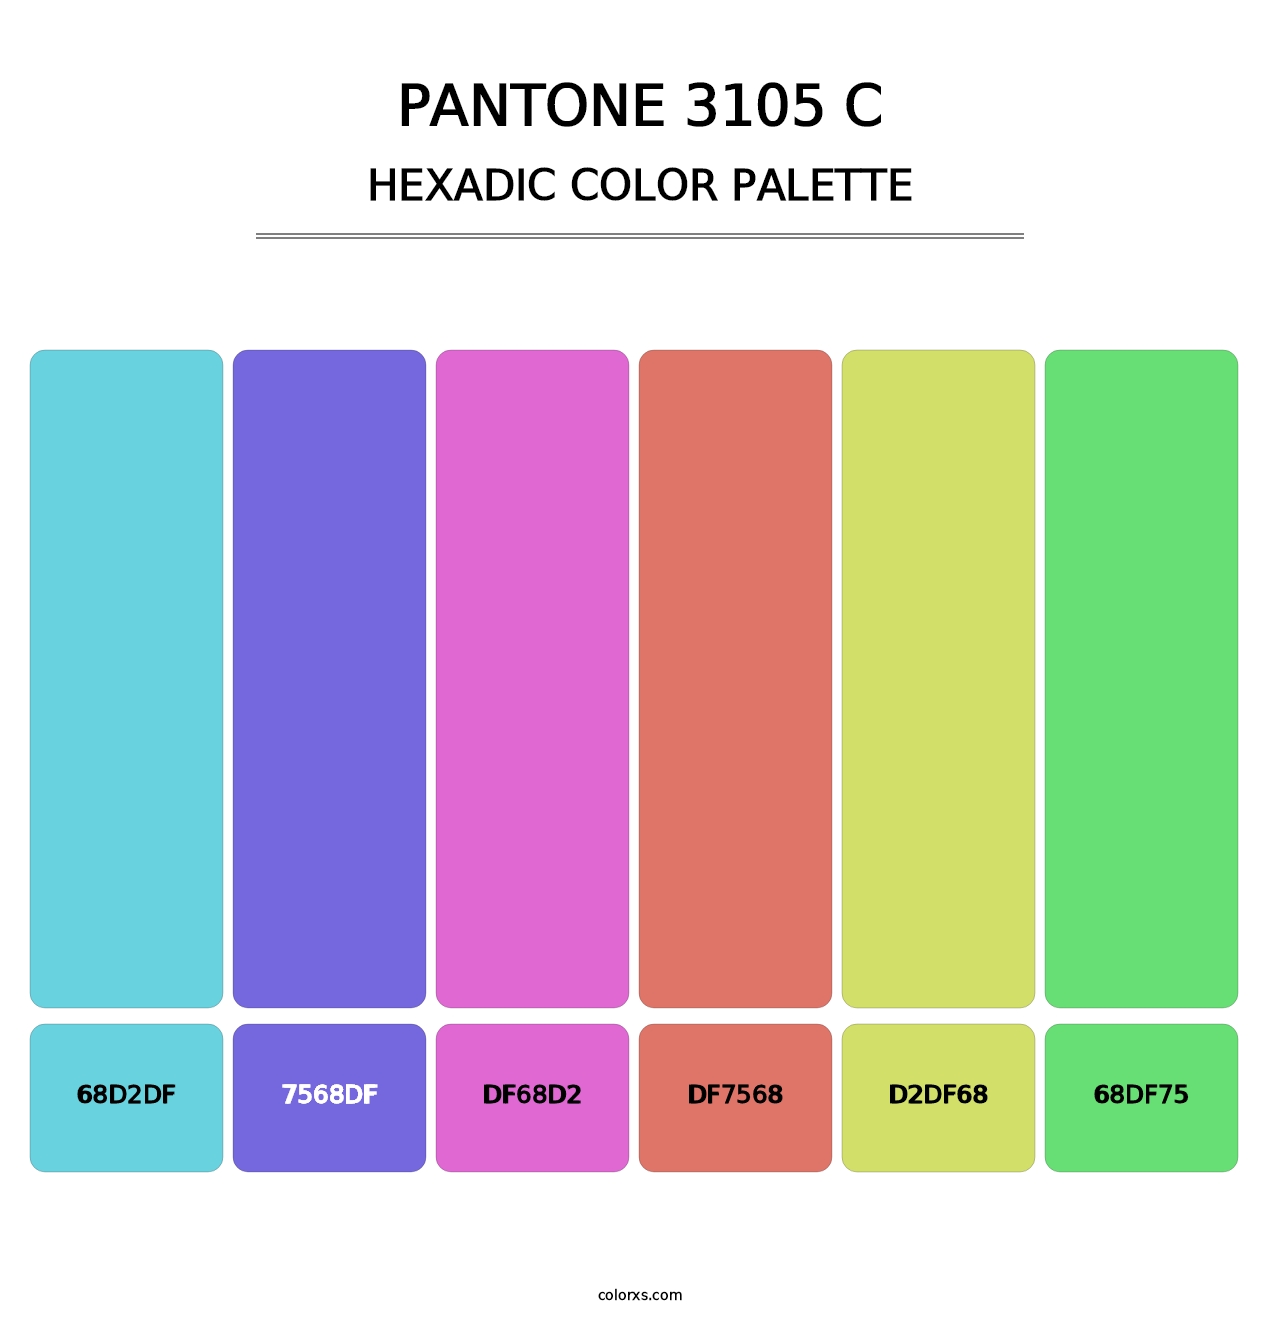 PANTONE 3105 C - Hexadic Color Palette